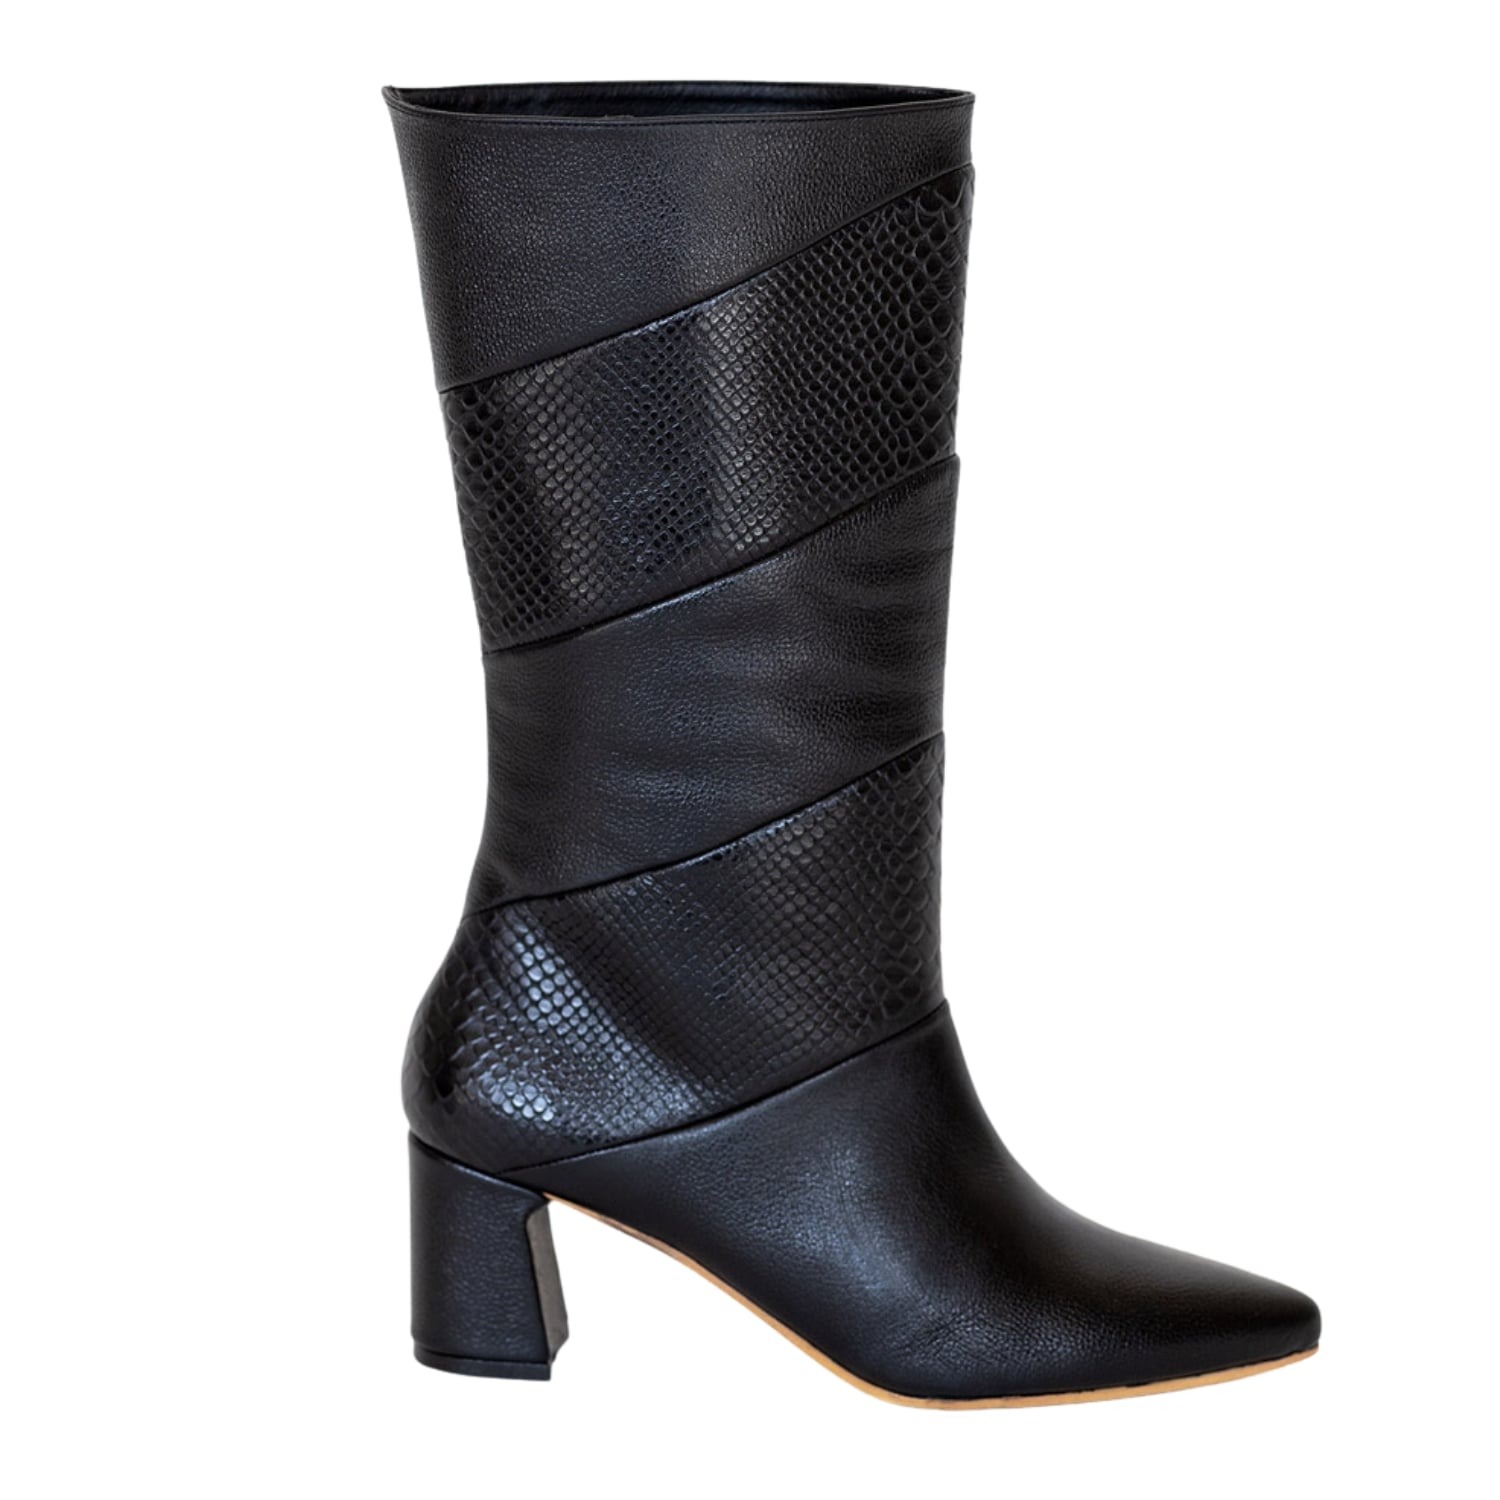 Women’s Ela Boots In Black & Black Croc Embossed Leather 7 Uk Stivali New York